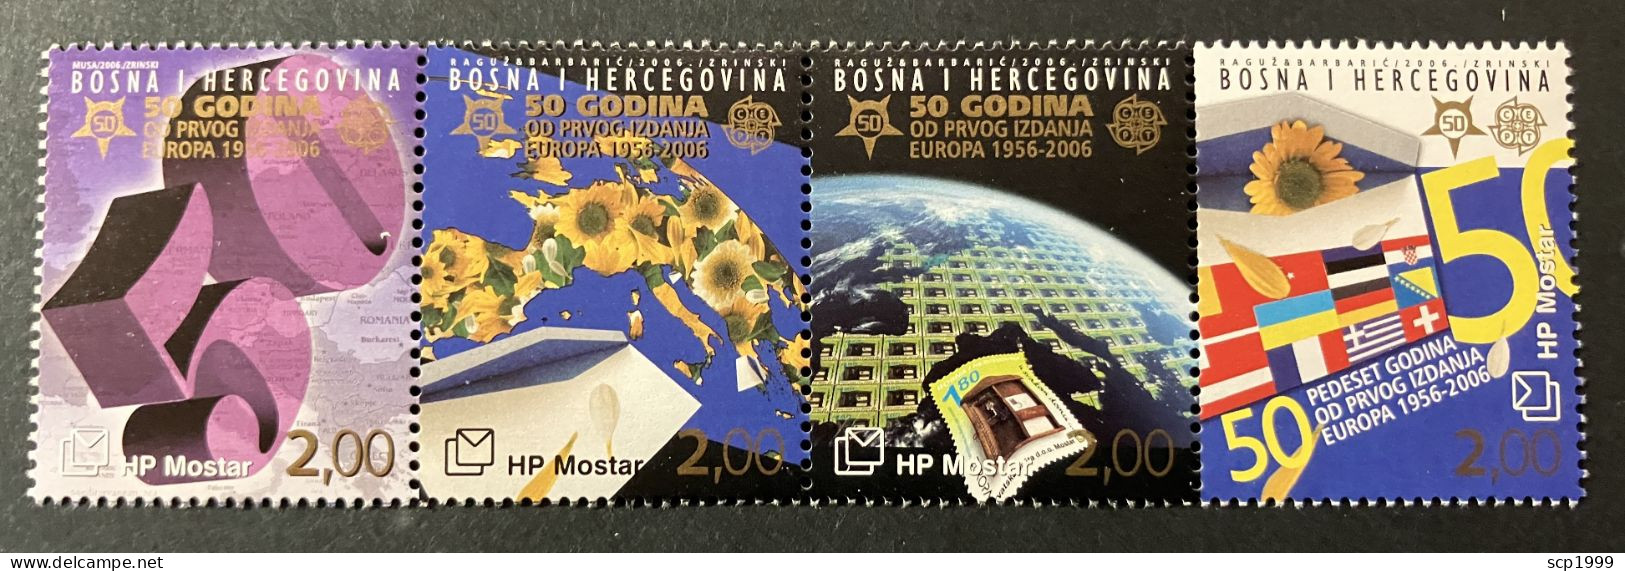 Bosnia And Herzegovina 2006 - Europa 50 Years Stamps Set MNH - Bosnien-Herzegowina